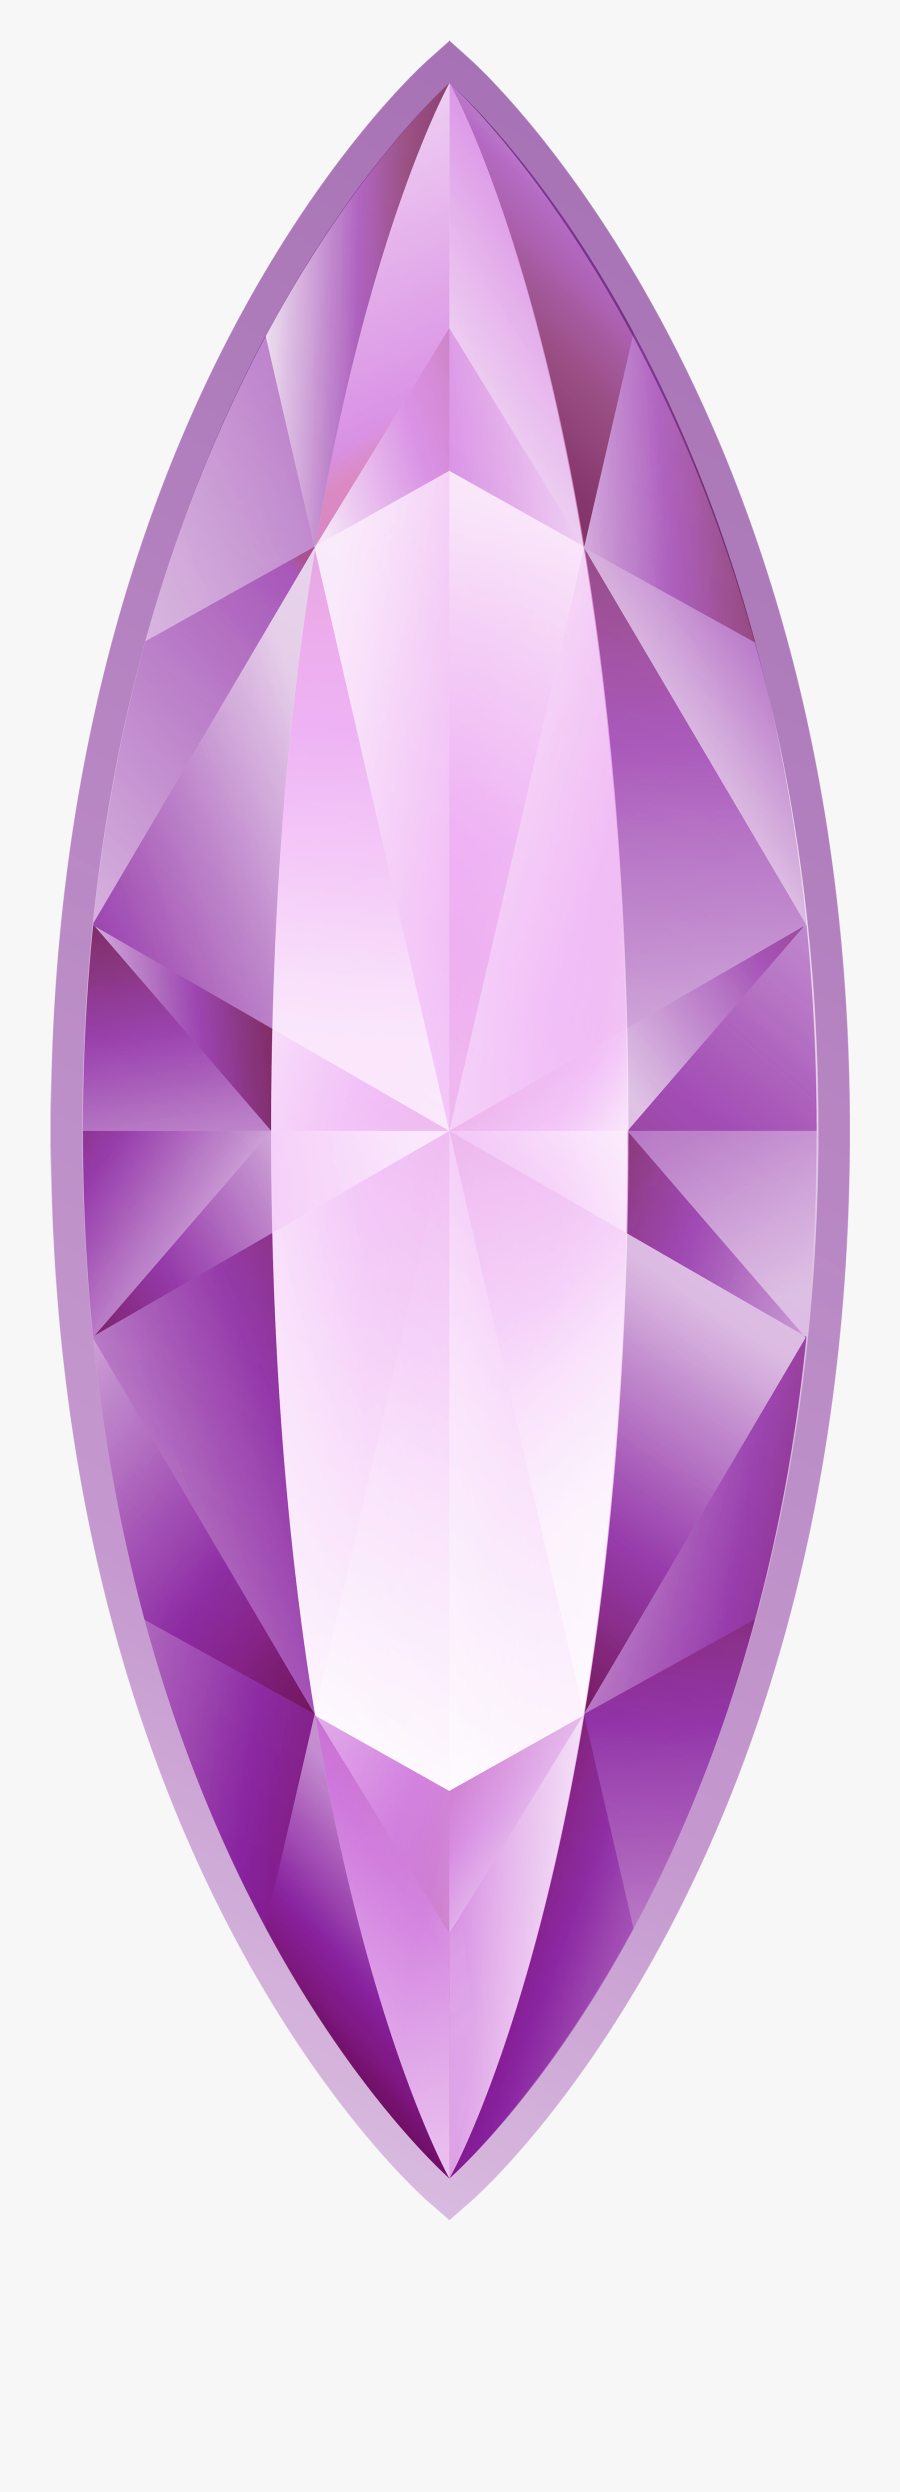 Diamond Clipart Purple Diamond - Diamond, Transparent Clipart